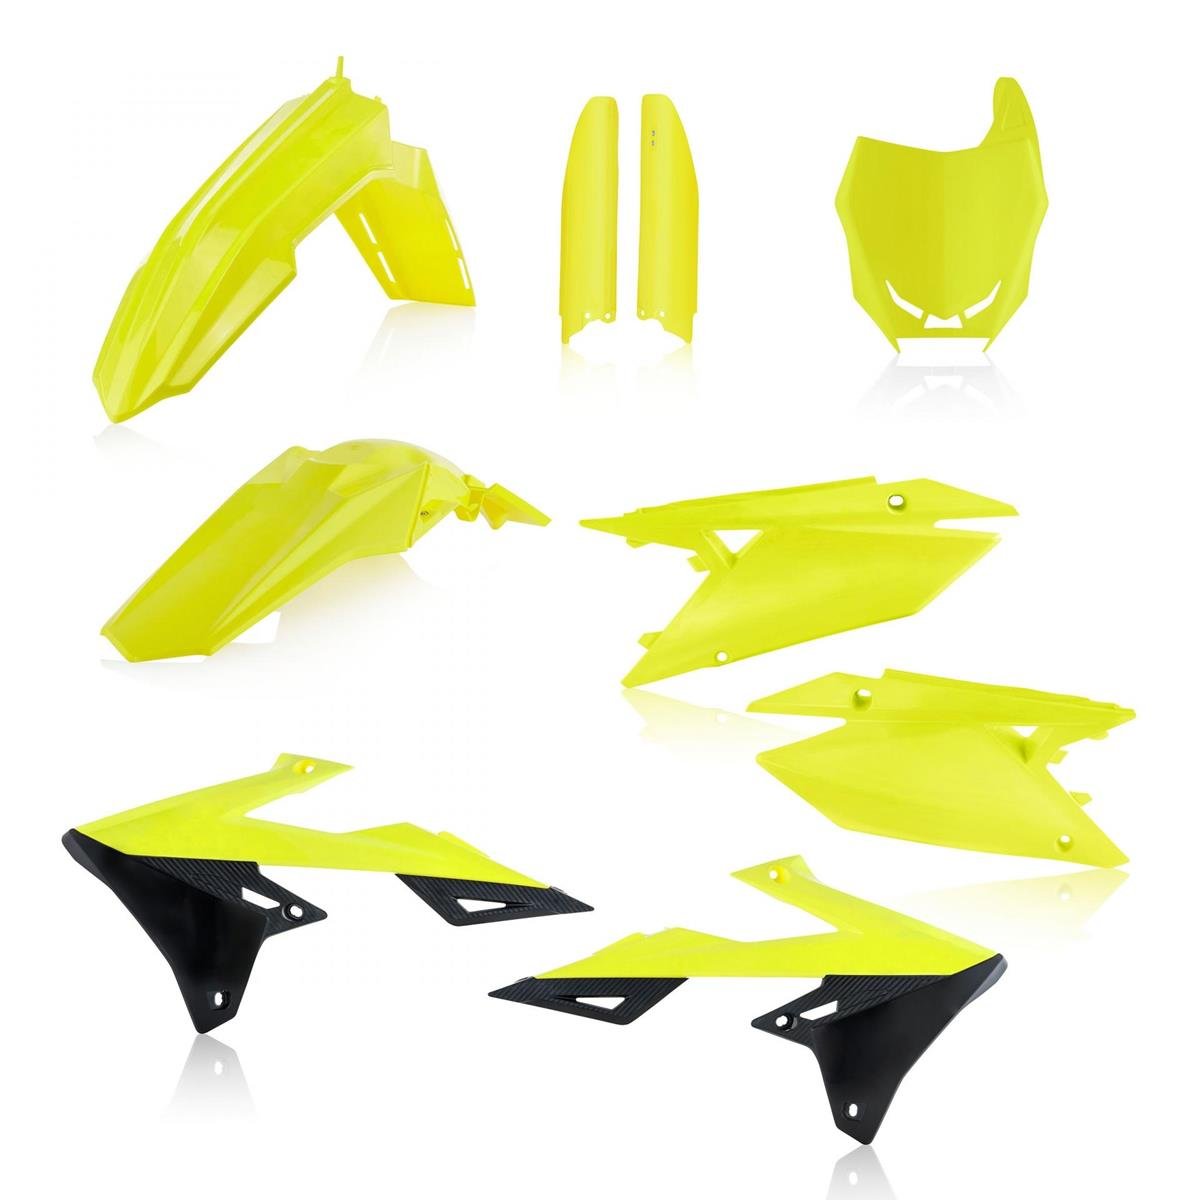 Acerbis Kit Plastiche completo Full-Kit Suzuki RMZ 450 2019, Giallo Fluo